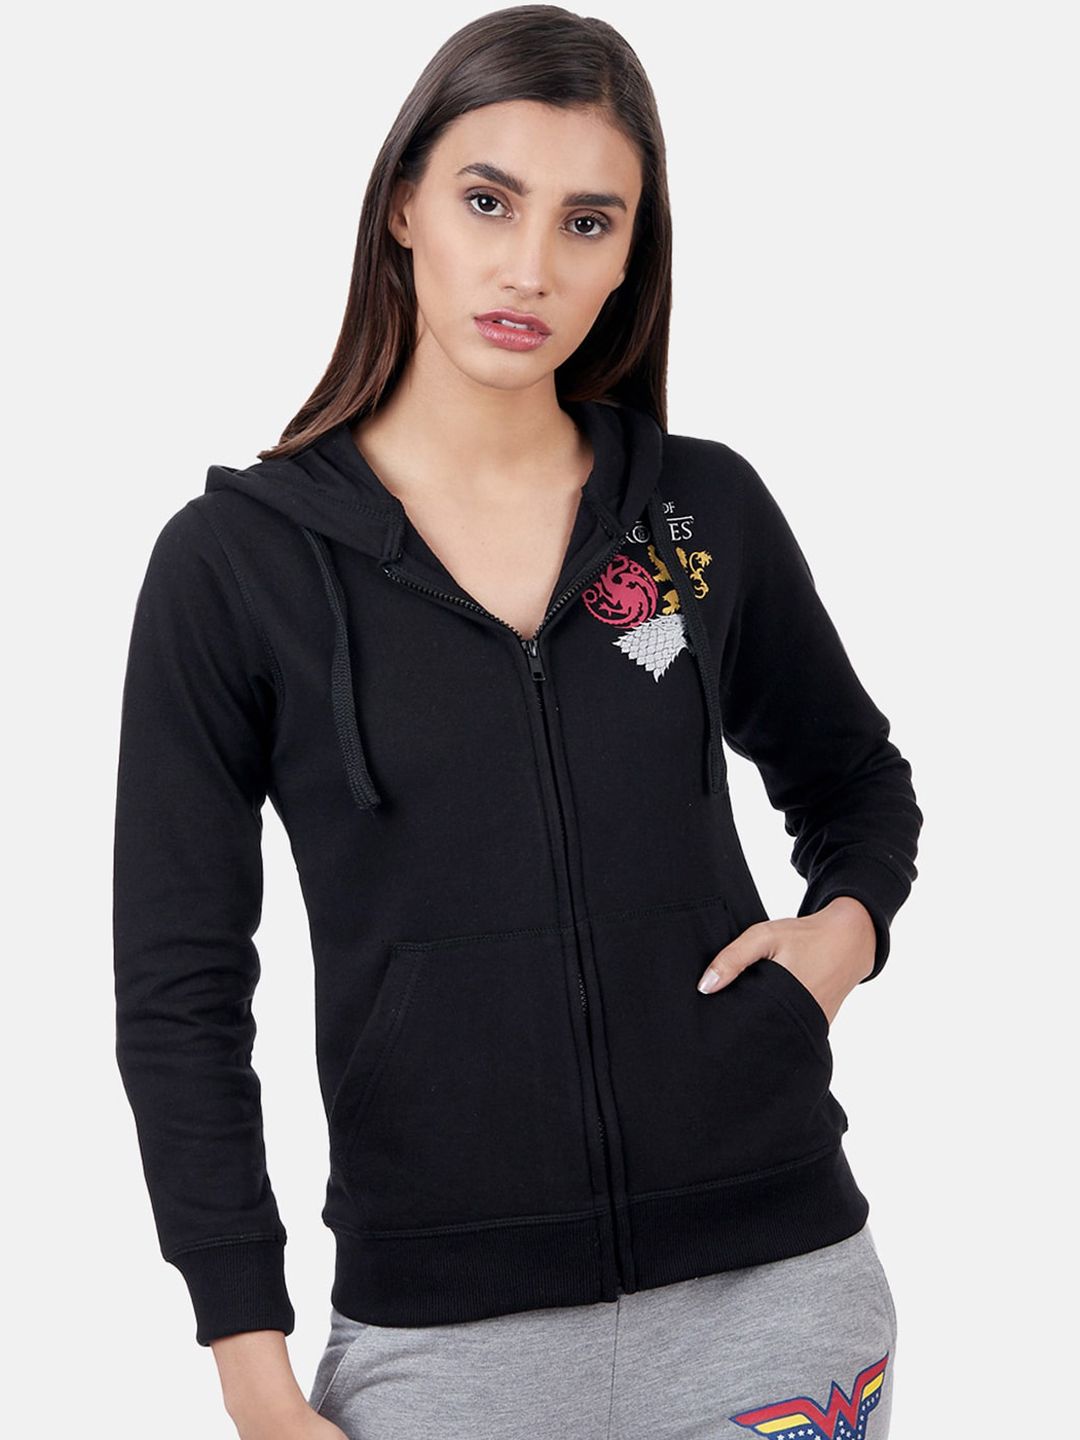 Free Authority Women Black Game Of Thrones Printed Hooded Sweatshirt Price in India